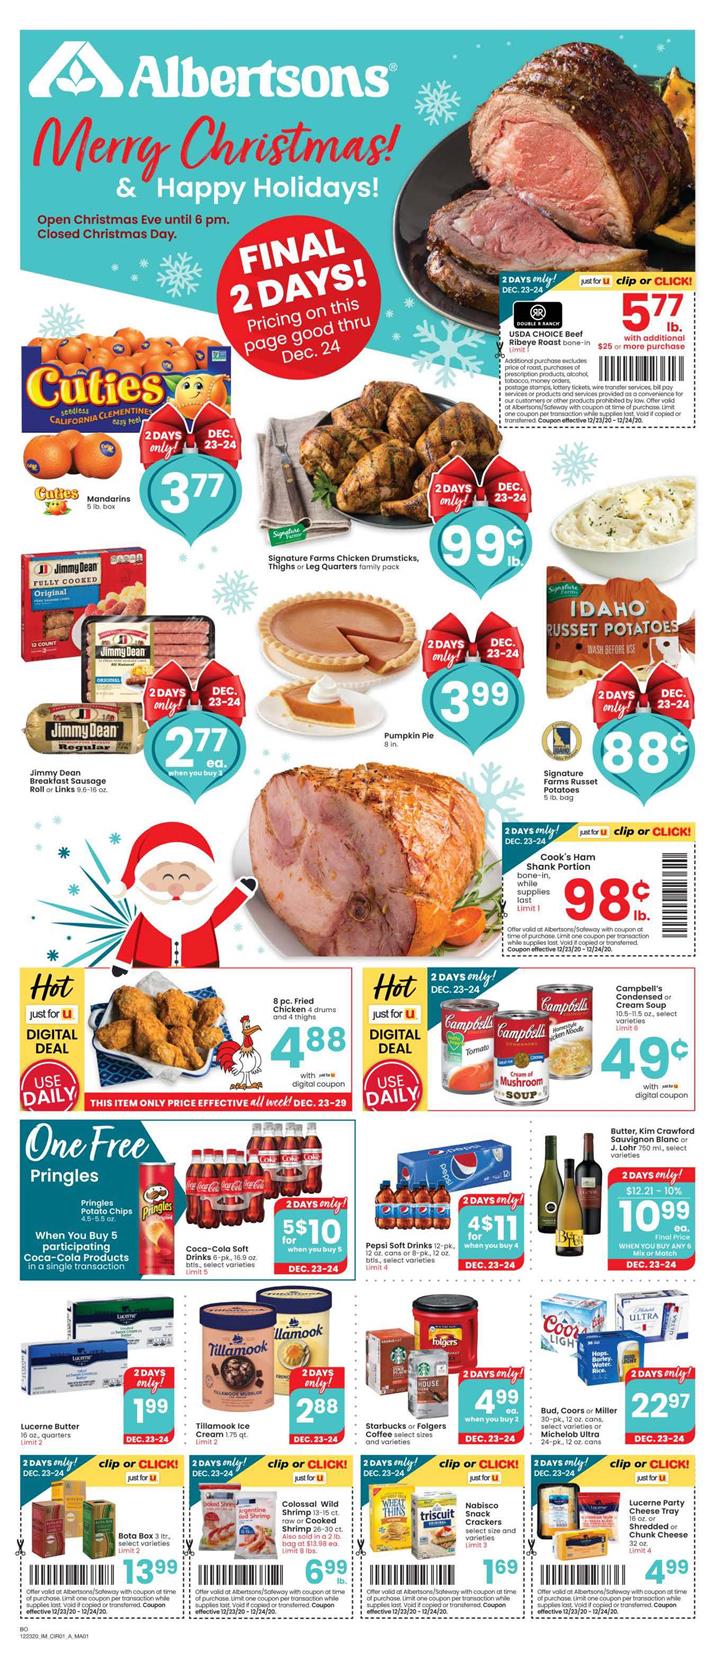 Albertsons Weekly Ad Christmas Dec 23 29, 2020 WeeklyAds2